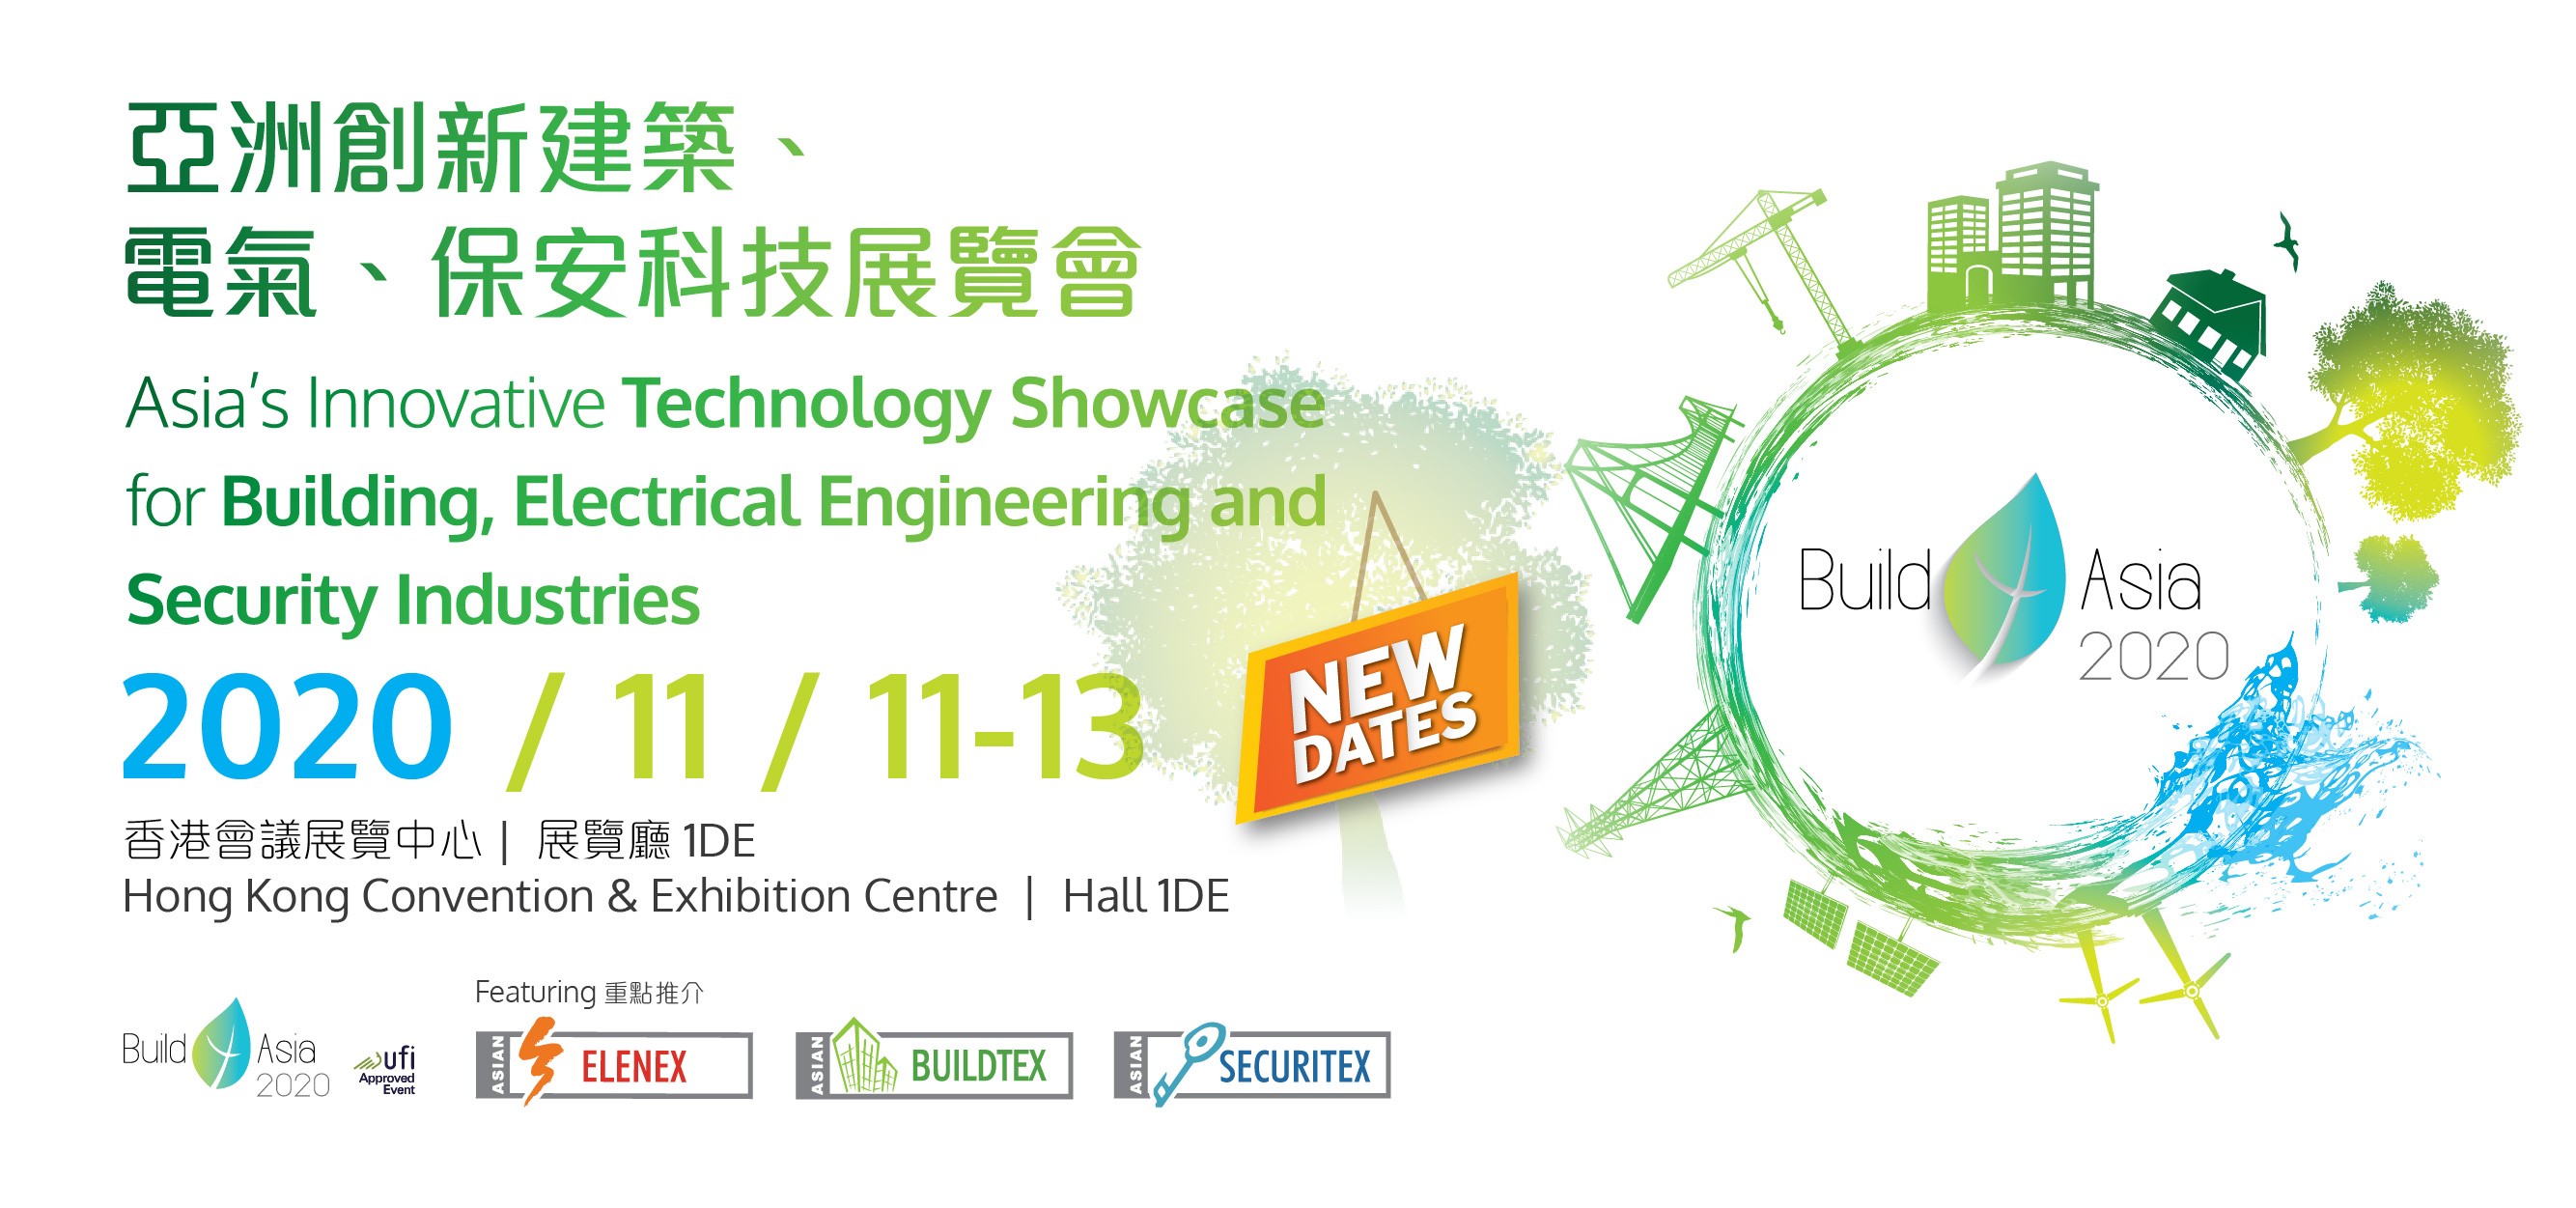 Build 4 Asia 2020 – 亚洲创新建筑、电器、保安科技展览会